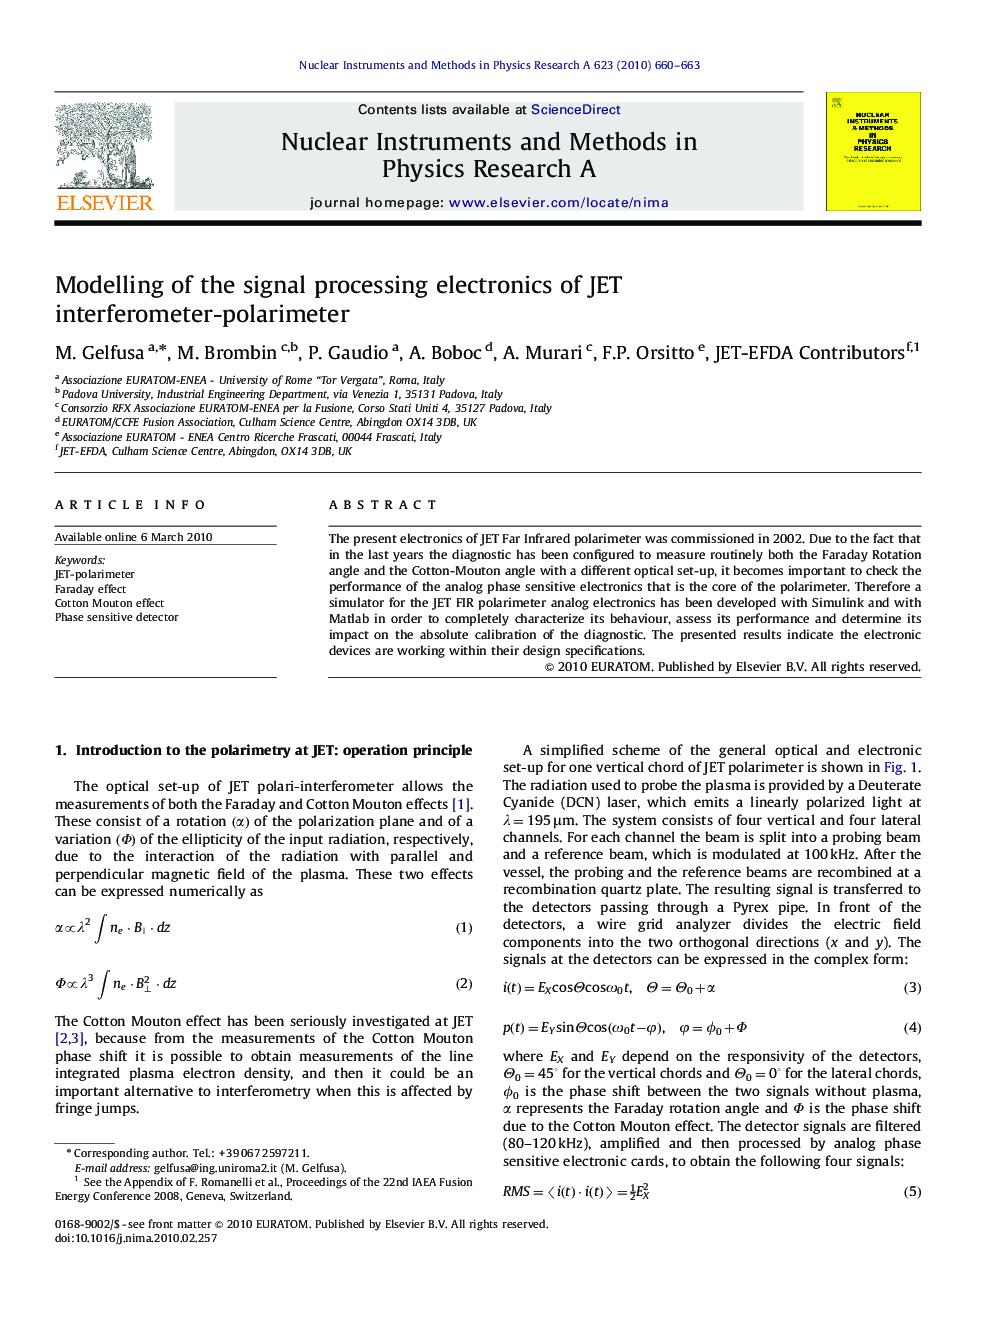 Modelling of the signal processing electronics of JET interferometer-polarimeter